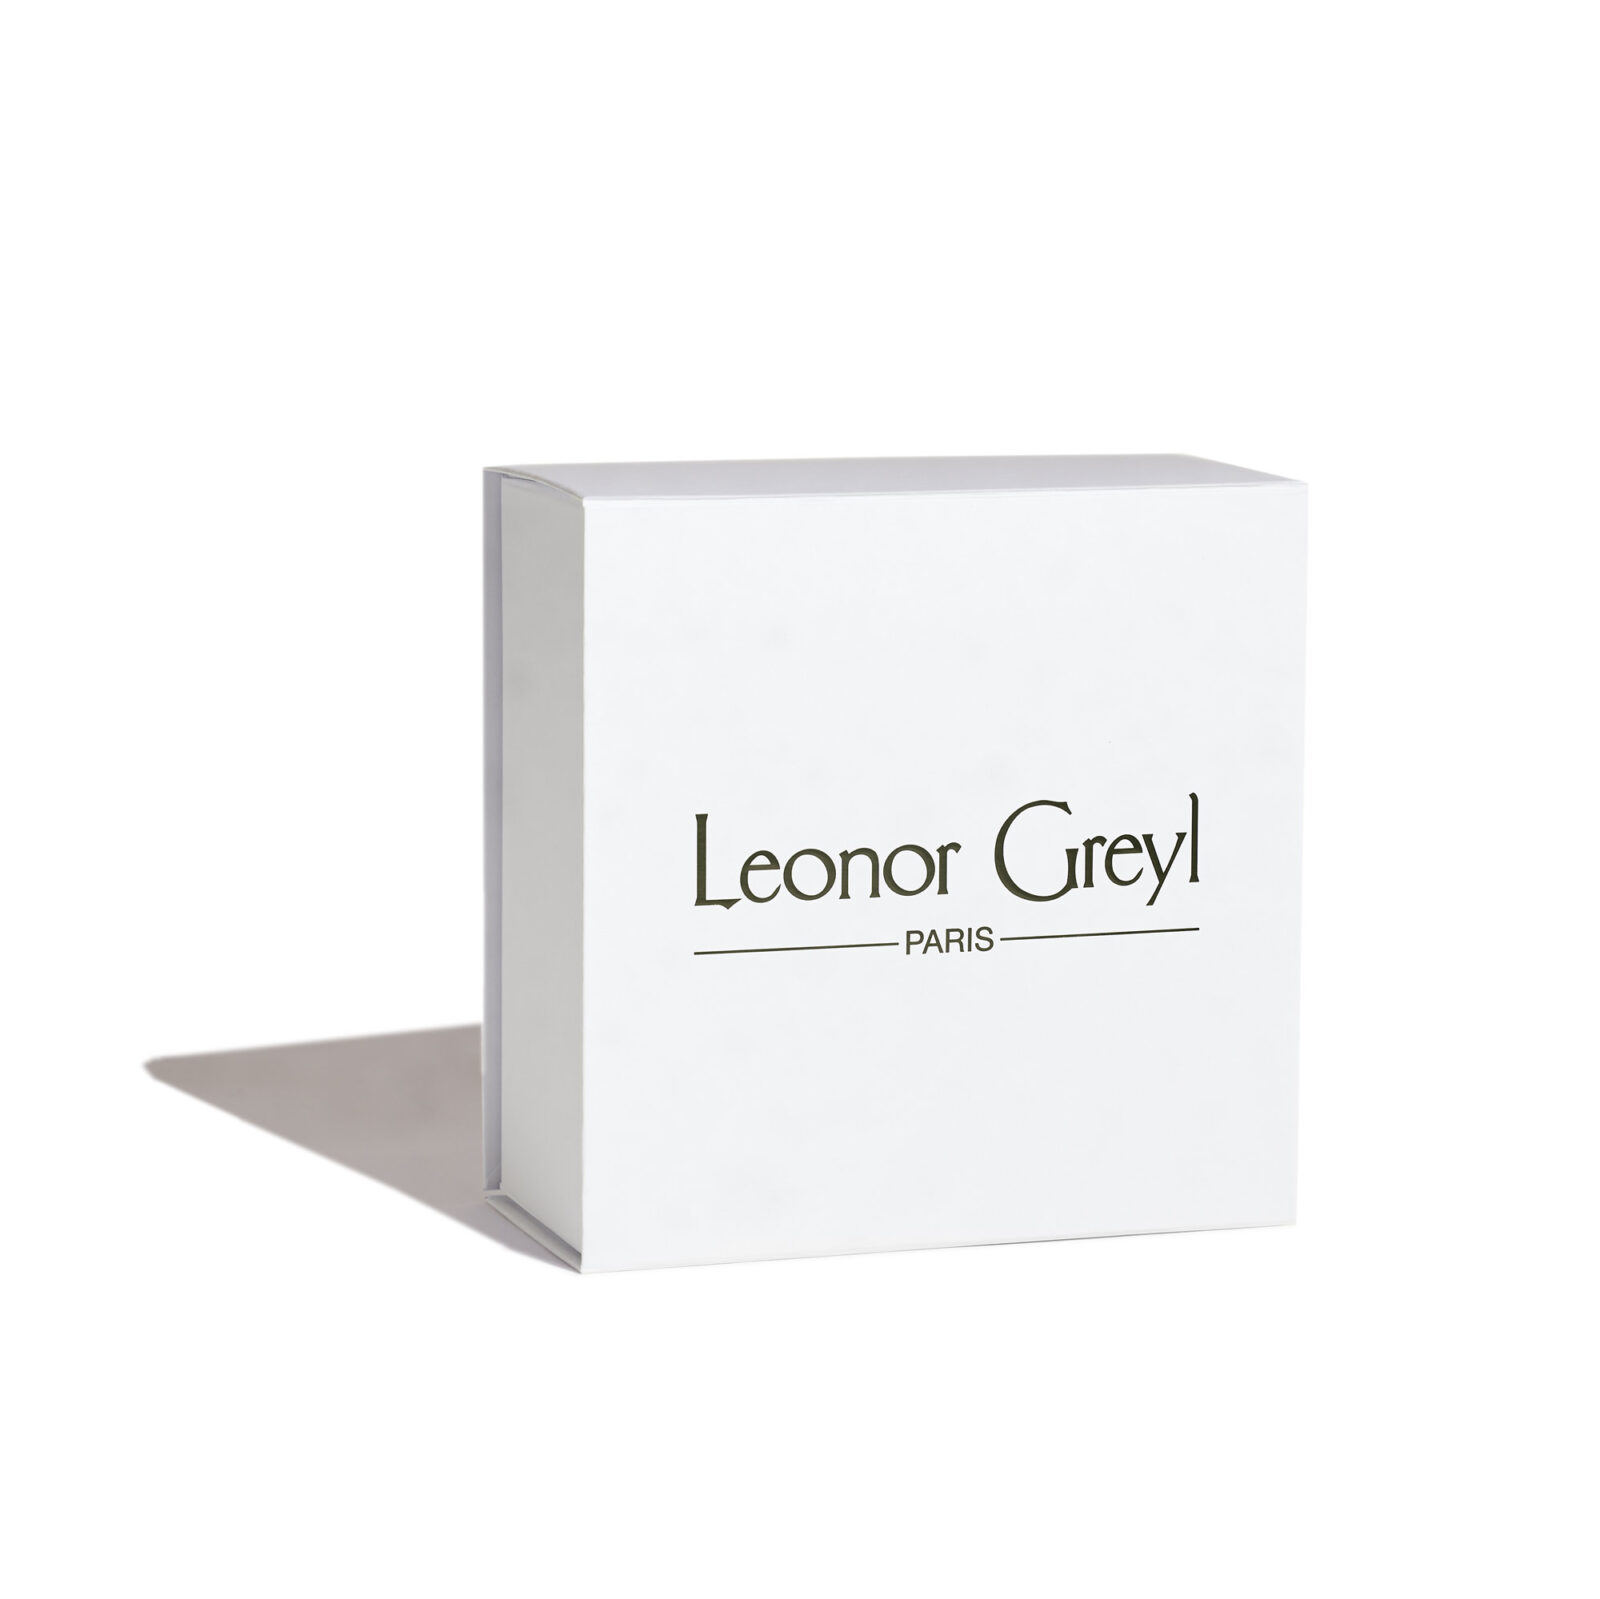 Leonor Greyl gift box